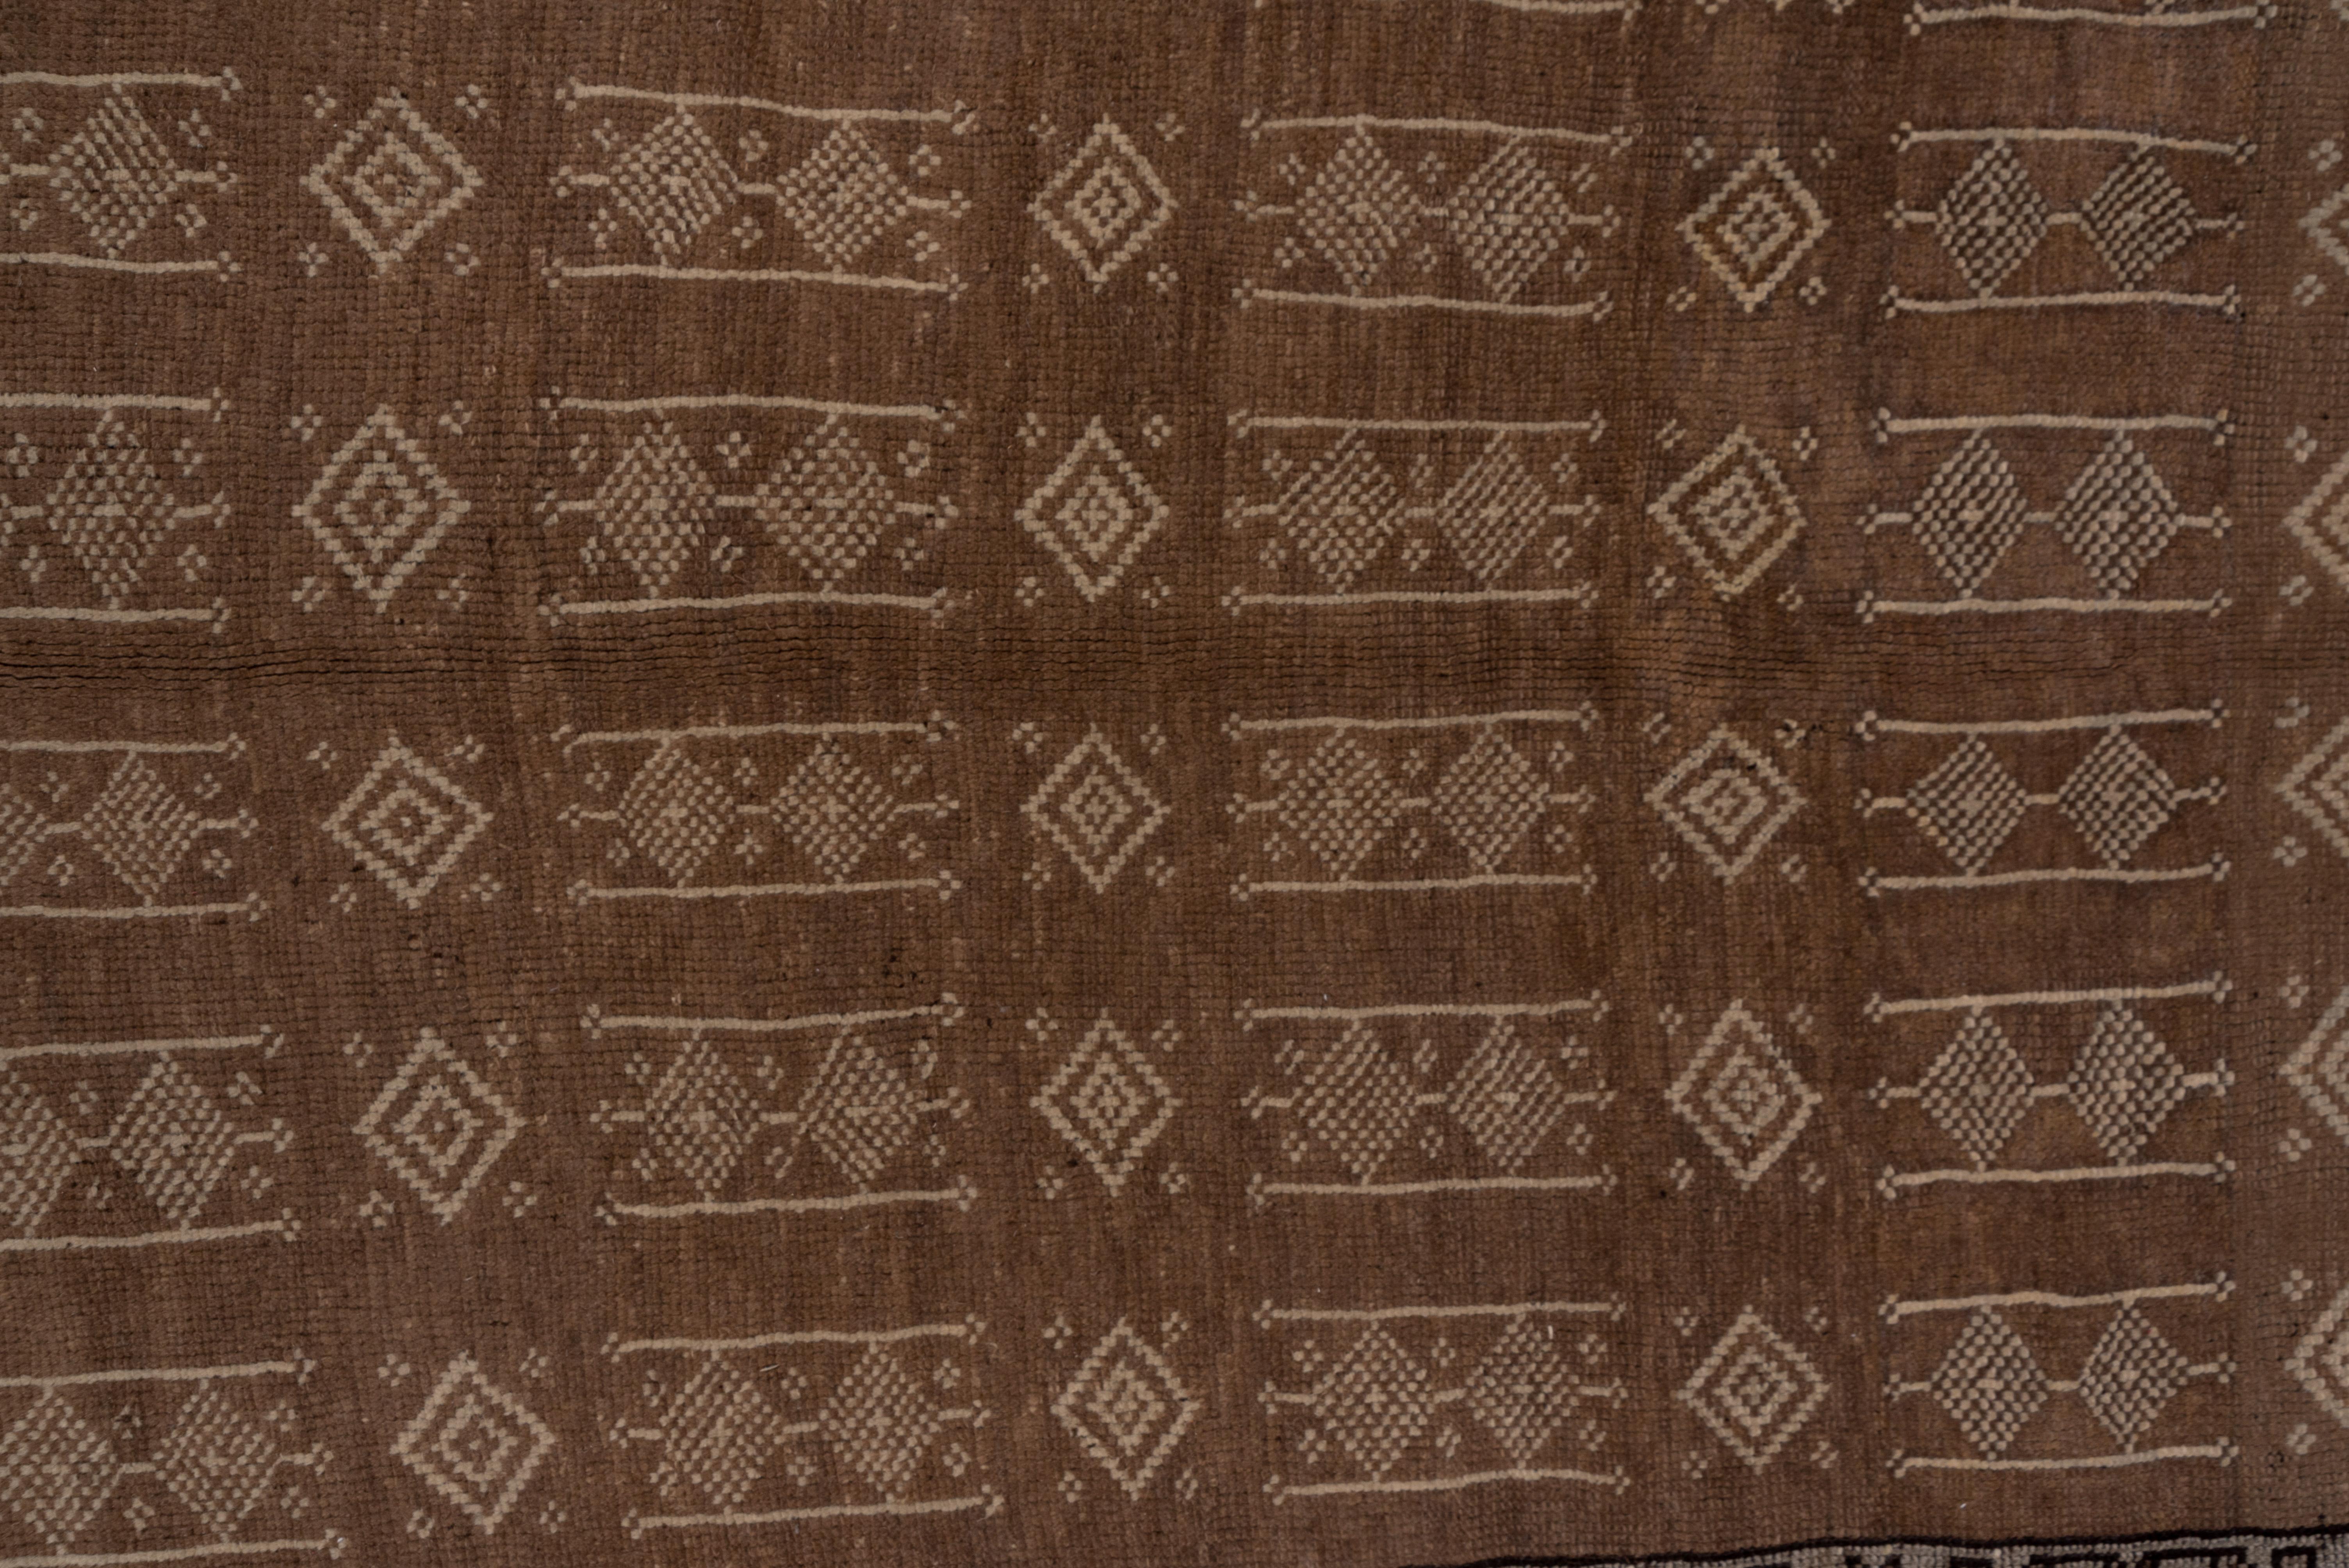 Hand-Knotted Unique Vintage Turkish Kars Gallery Carpet, Brown Palette, Allover Field For Sale